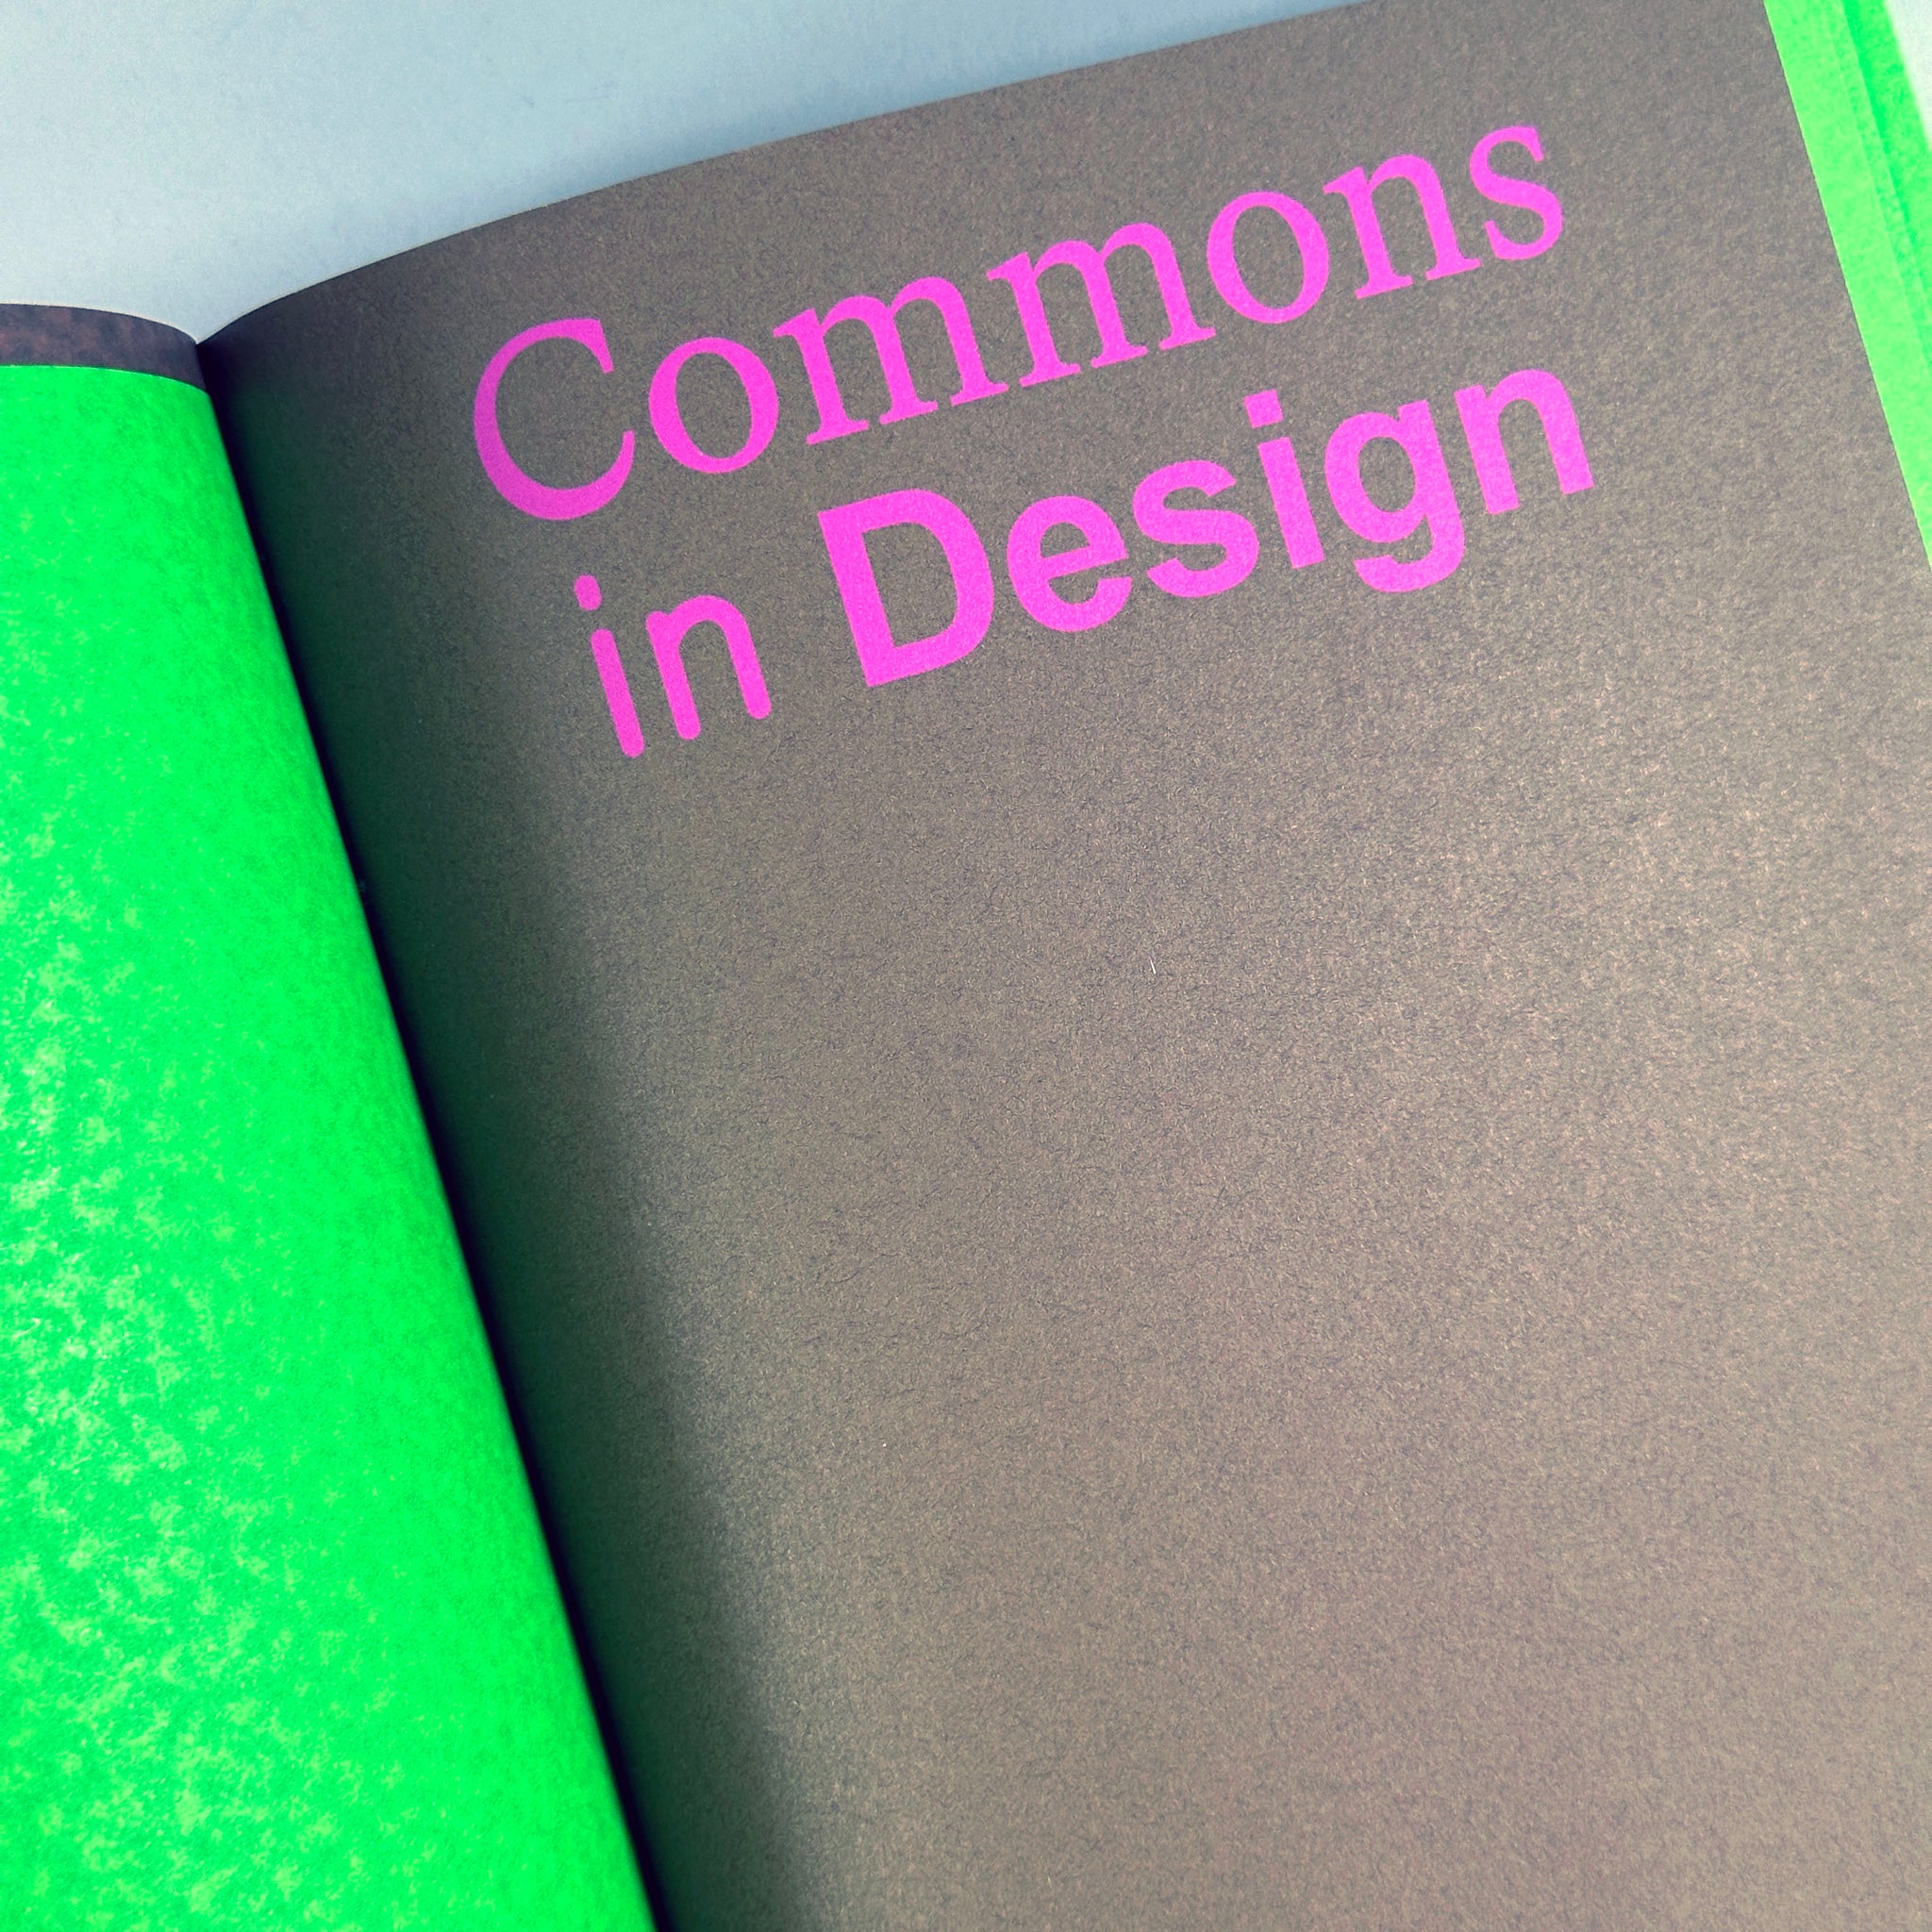 Commons in Design